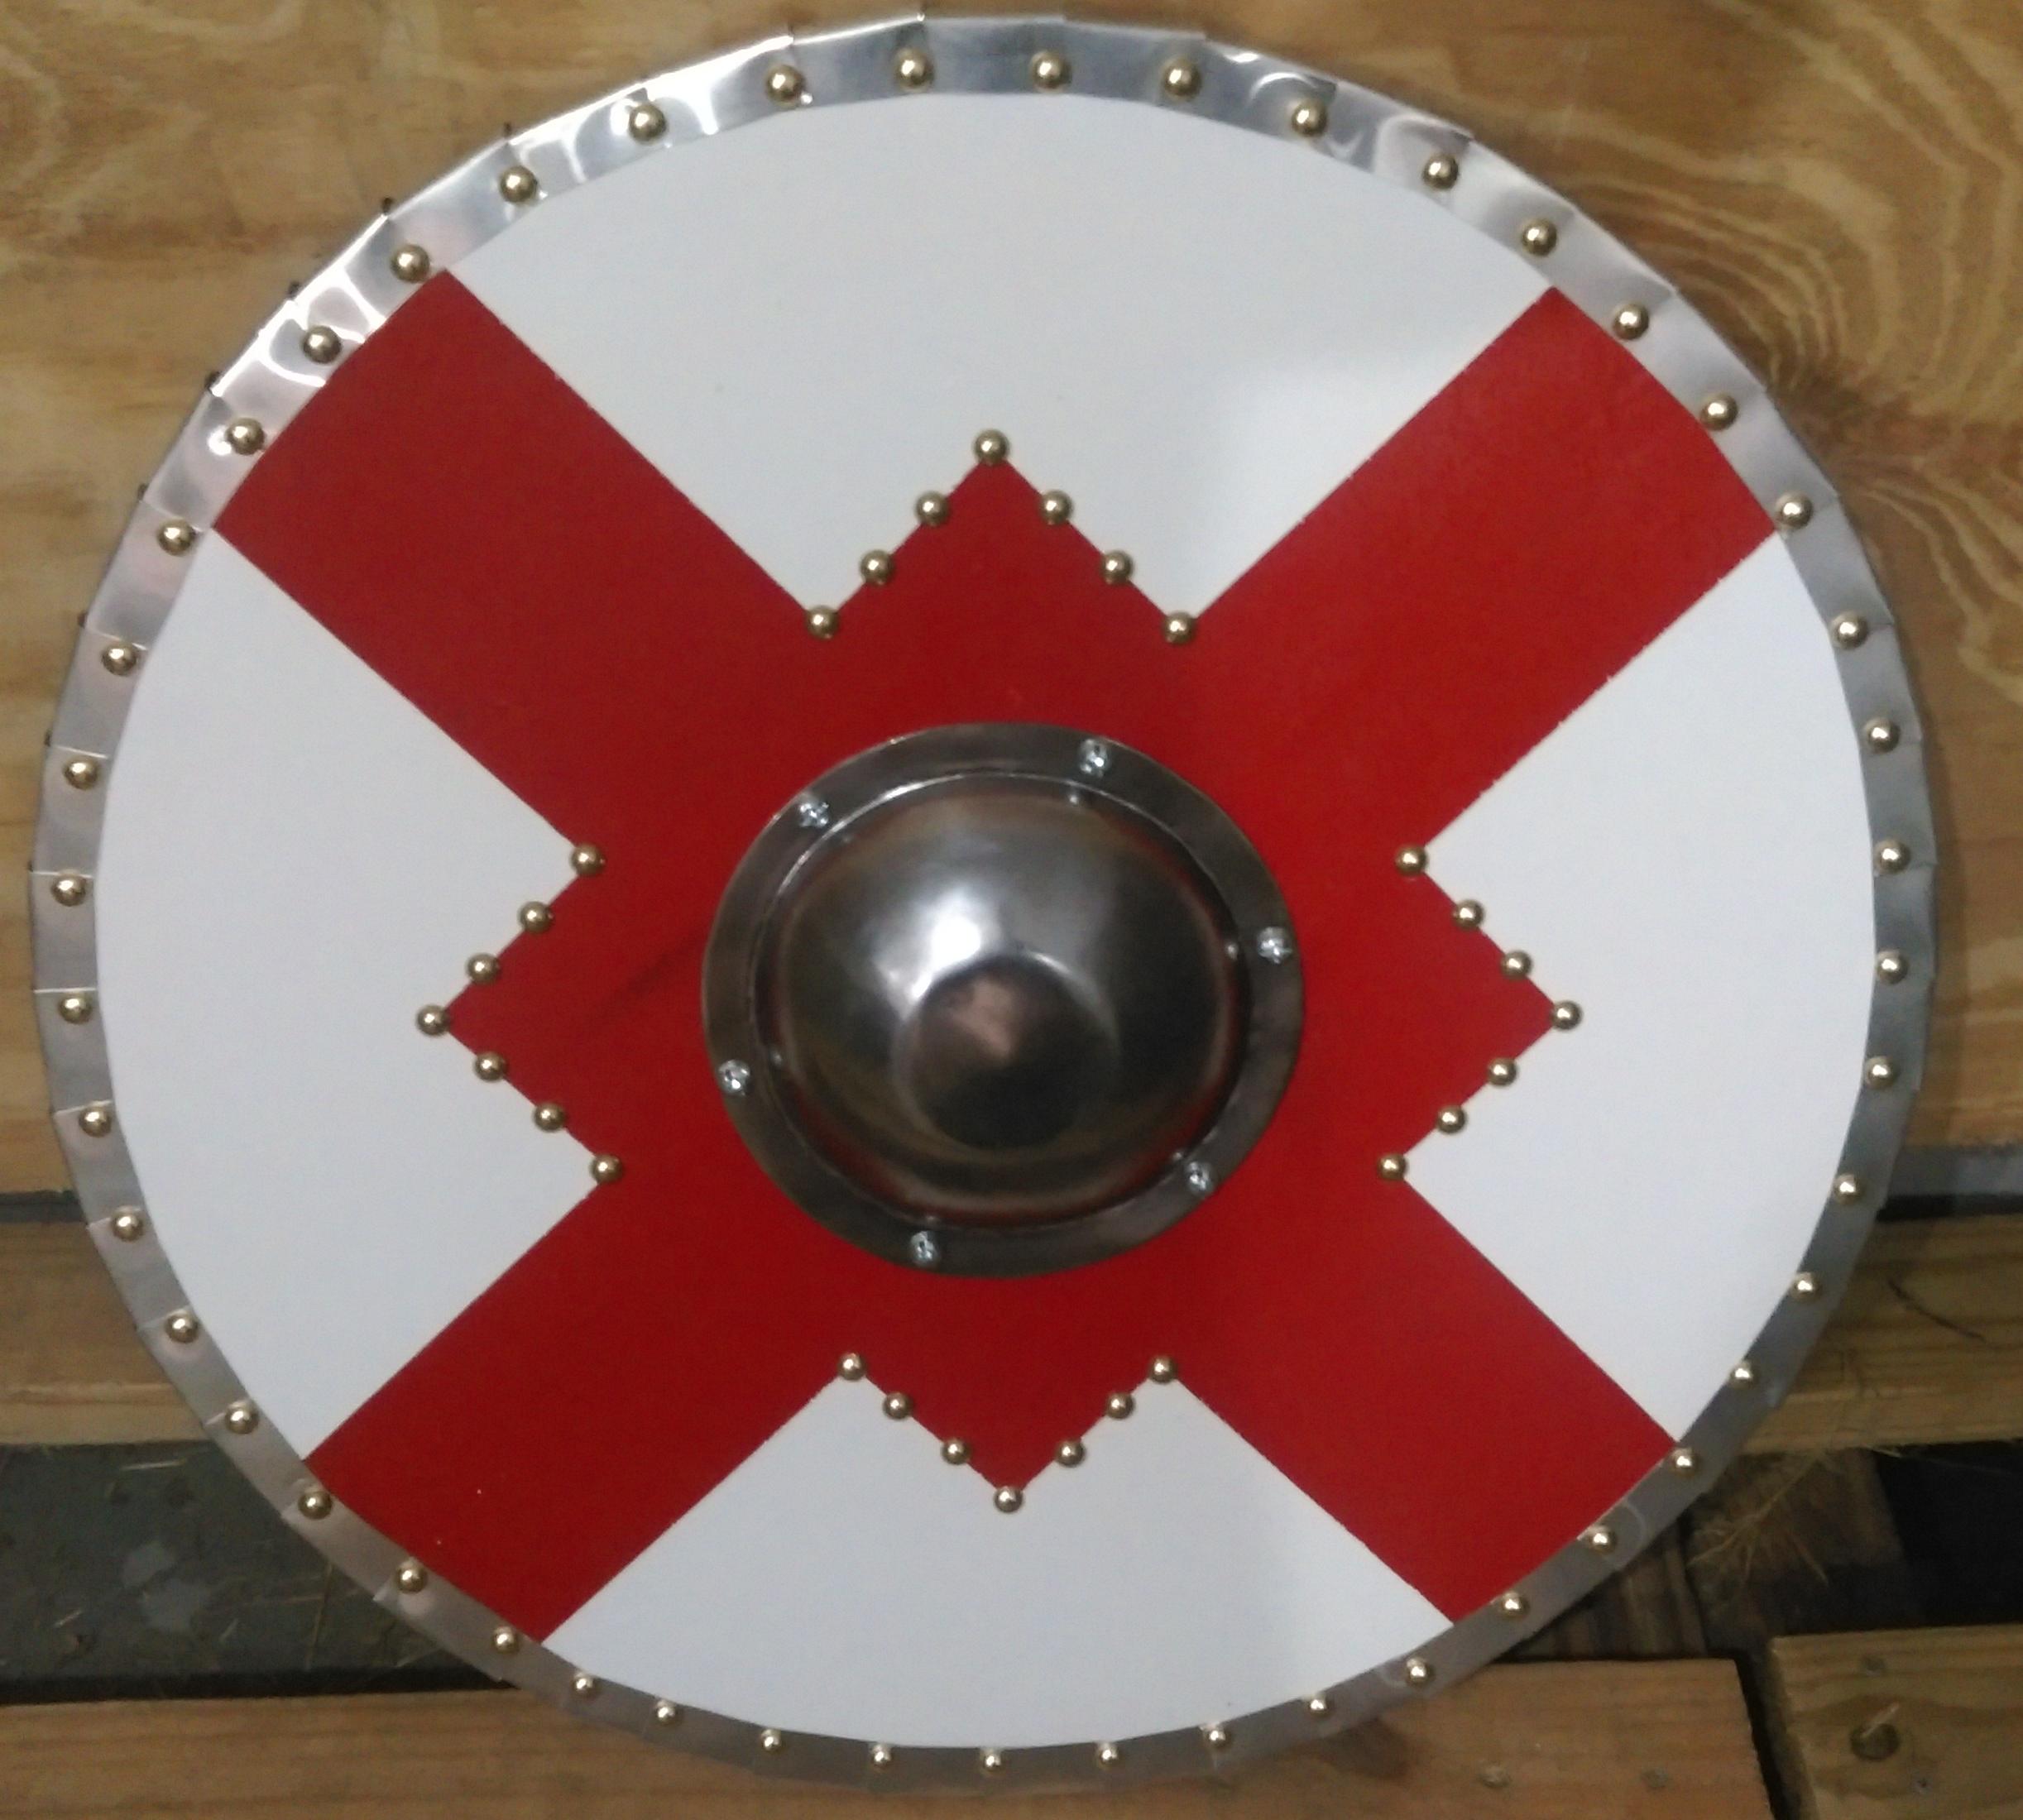 I made some Viking Shields - Album on Imgur